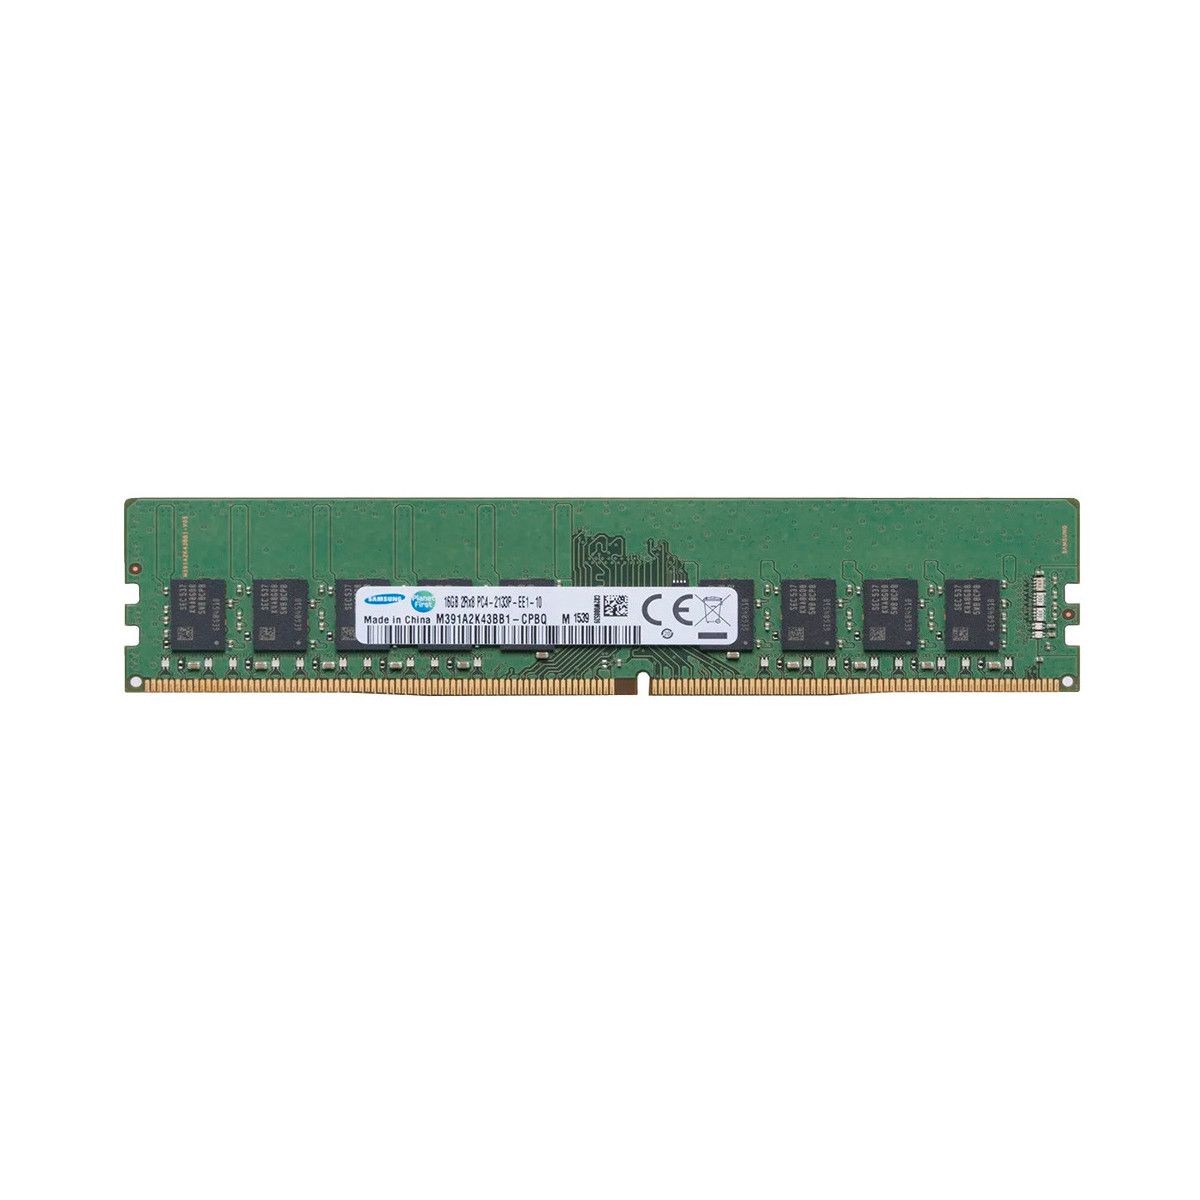 4X70K14185-MS -NO- Memstar 1x 16GB DDR4-2133 ECC UDIMM PC4-17000P-E